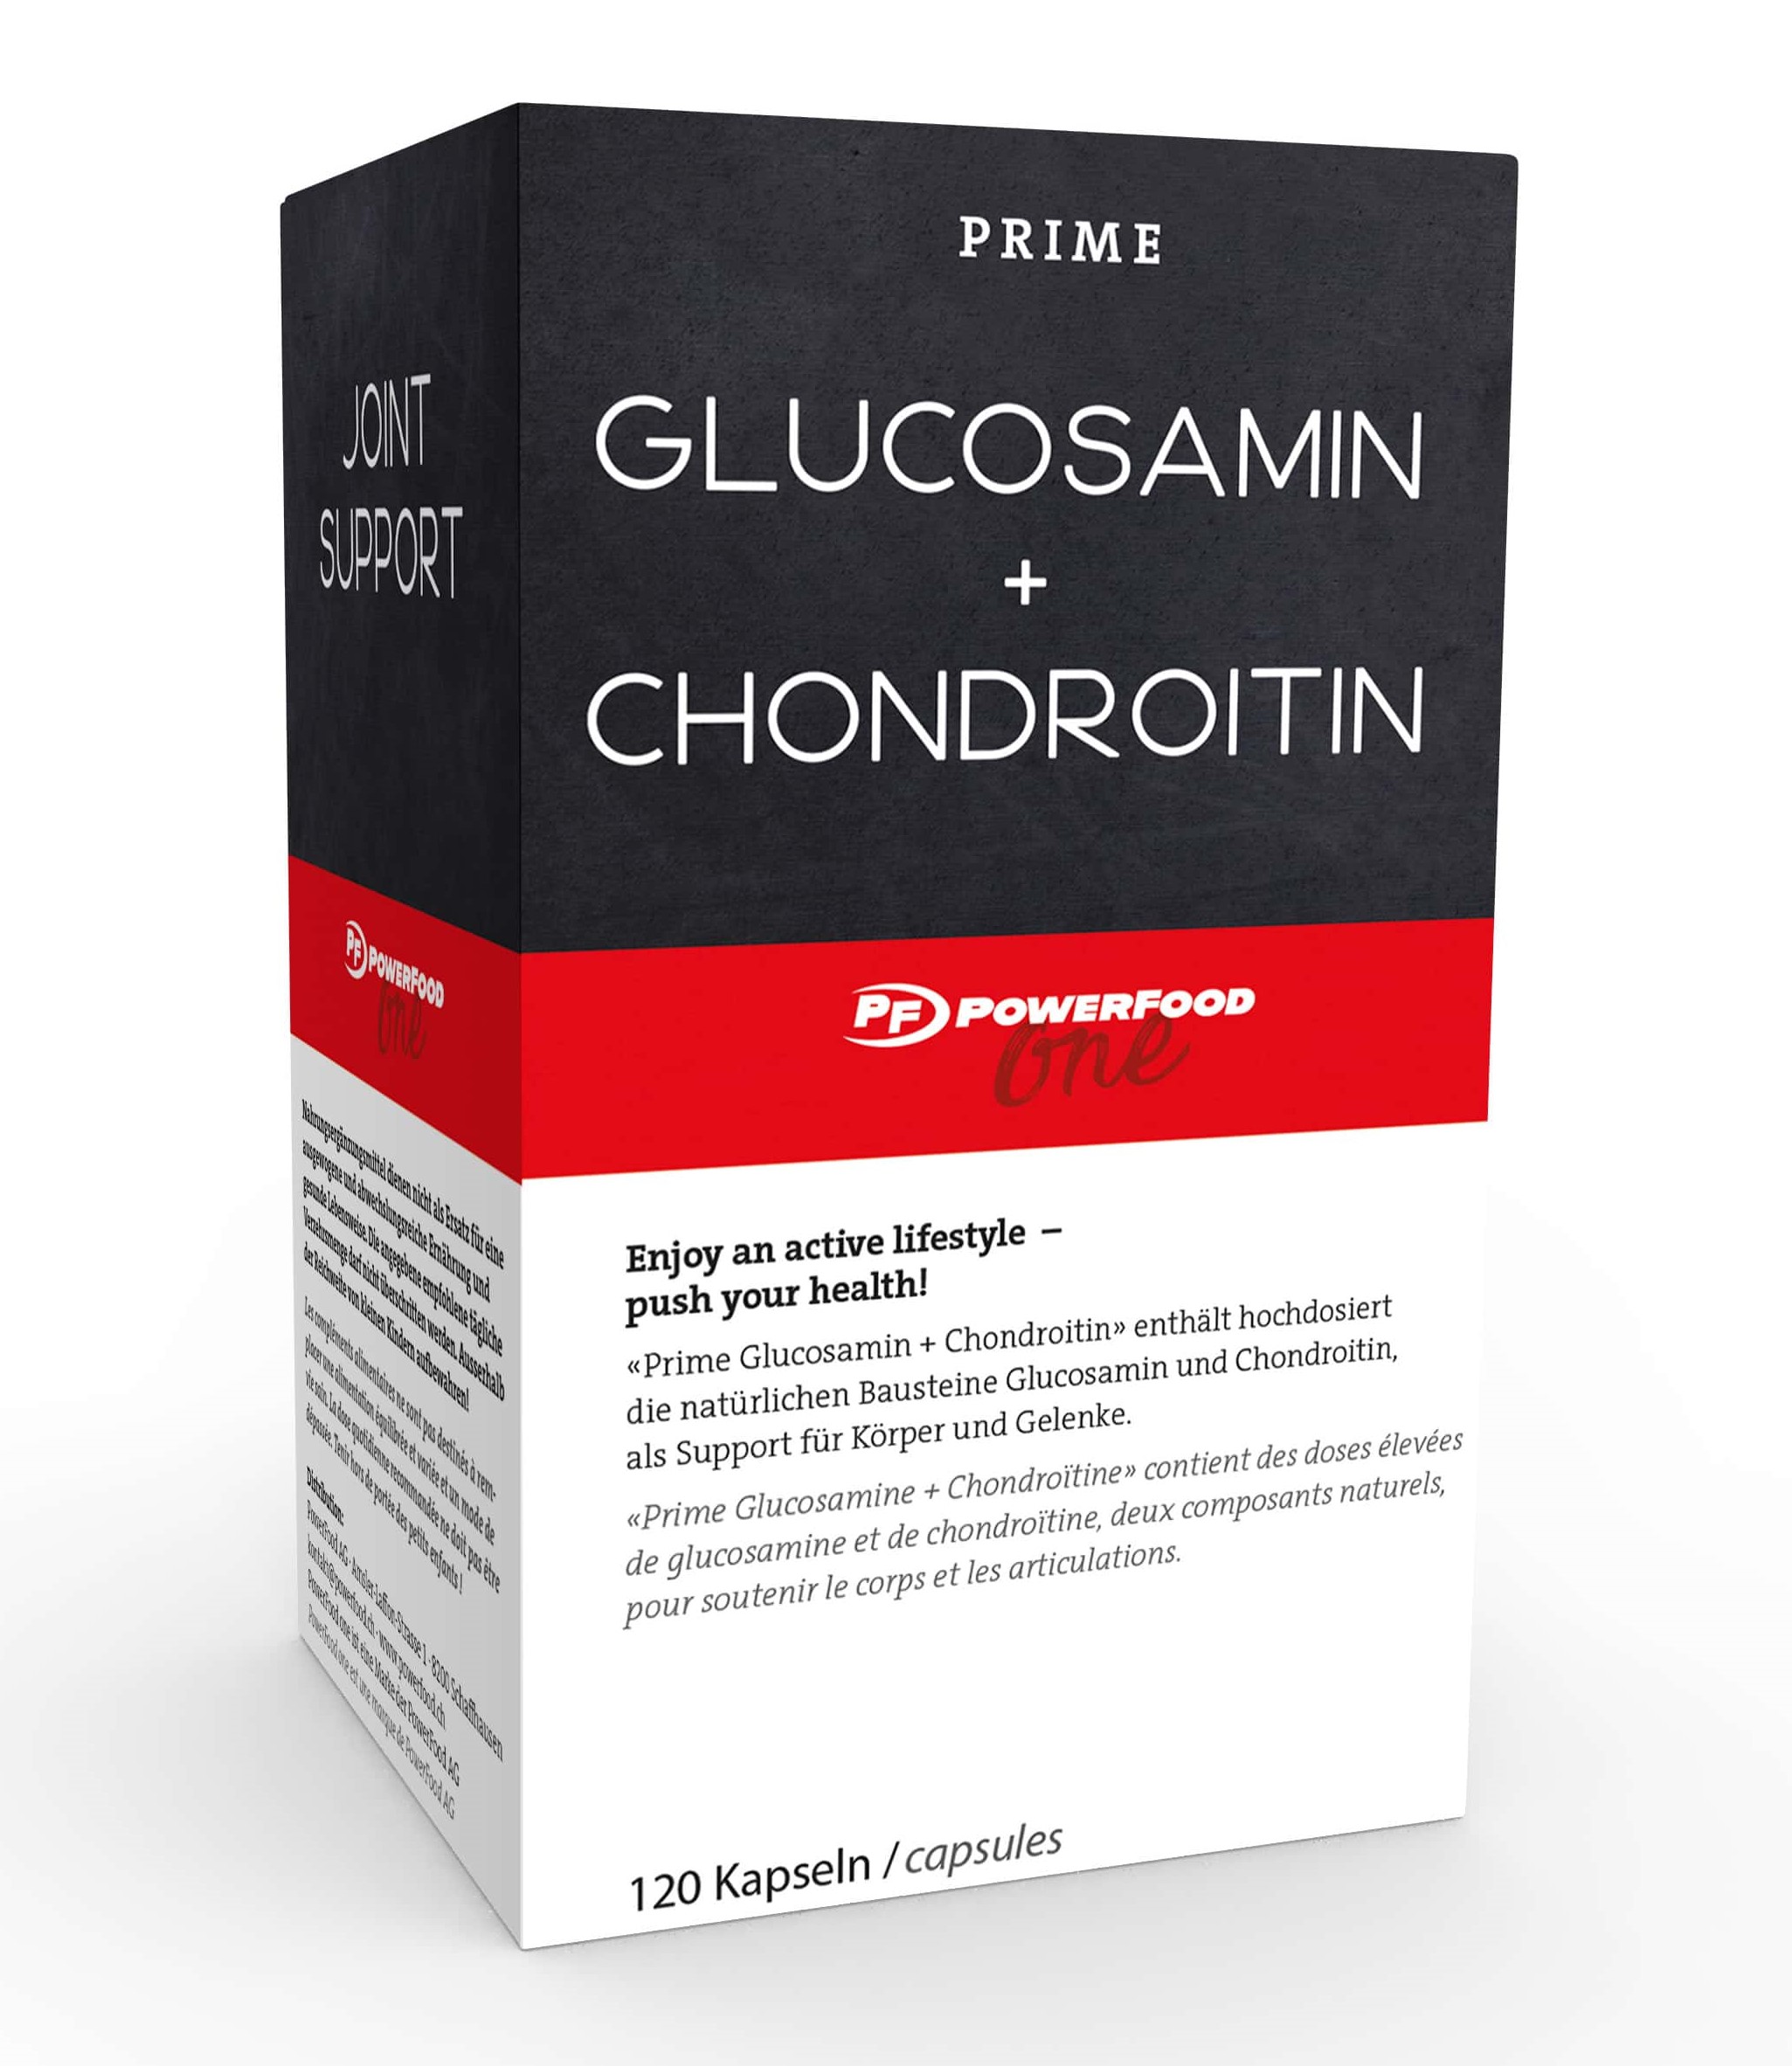 PowerFood One Glucosamin + Chondroitin (120 Caps)